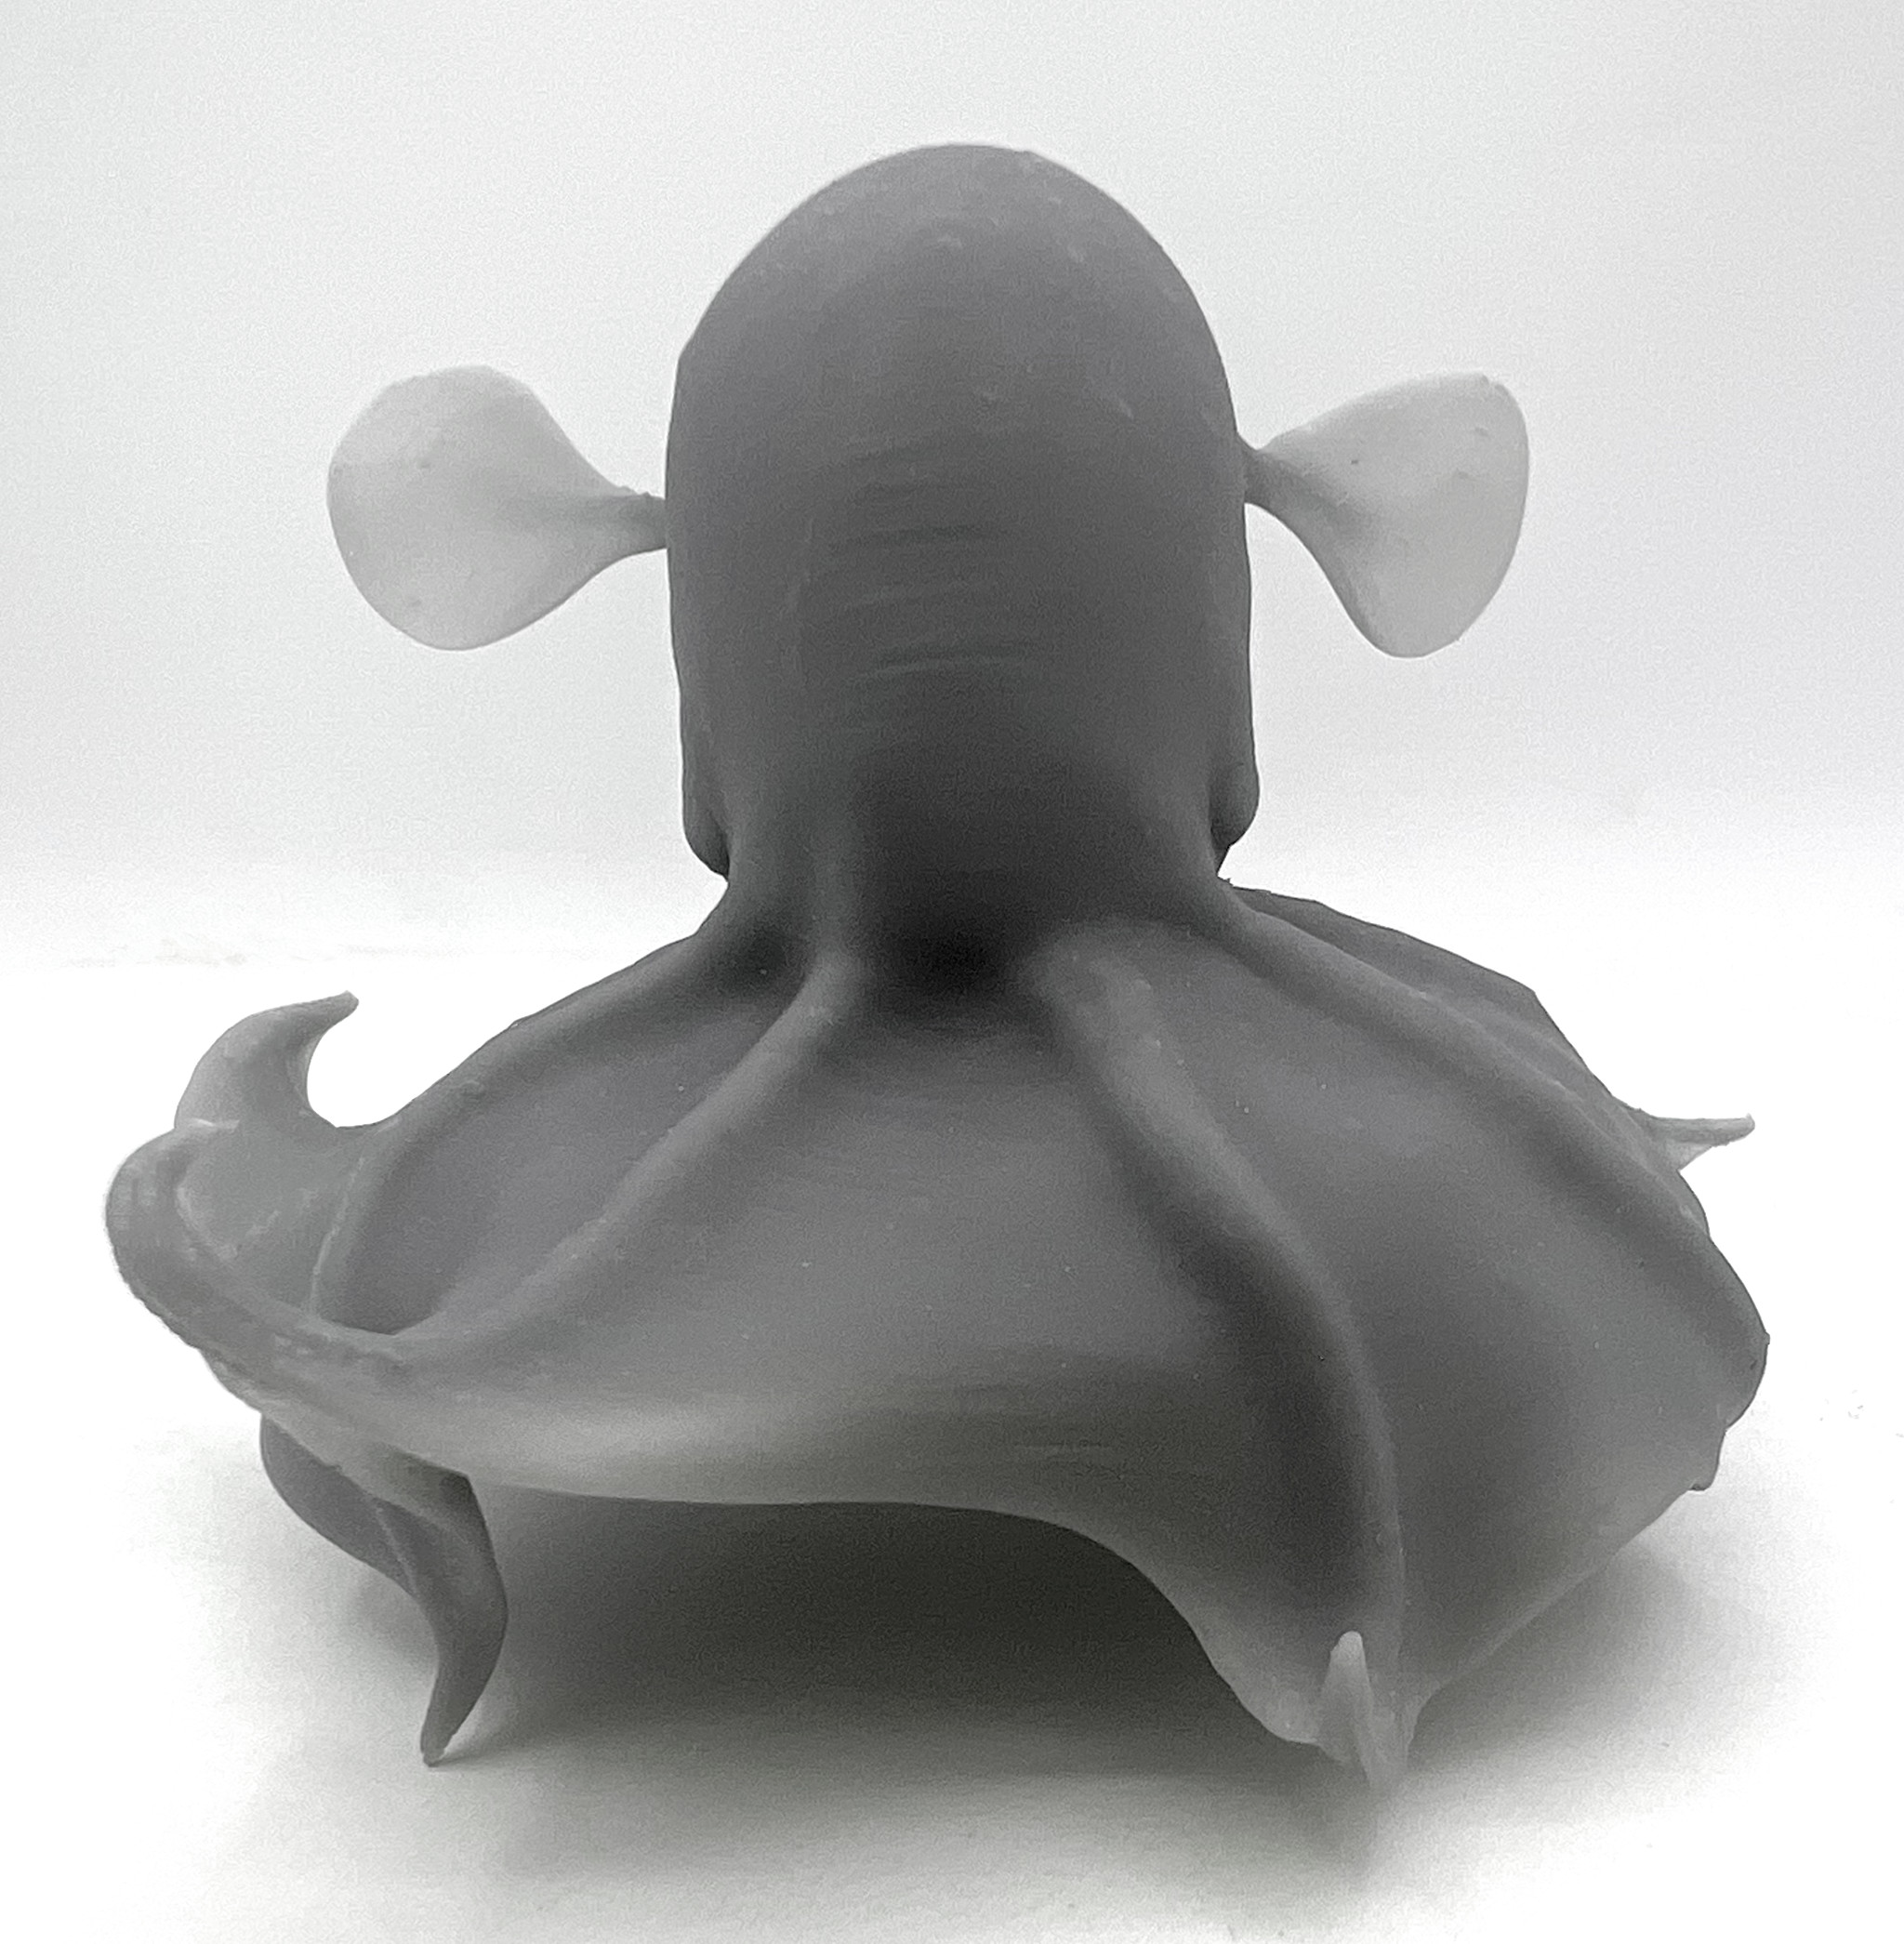 3d Print of Dumbo Octopus model